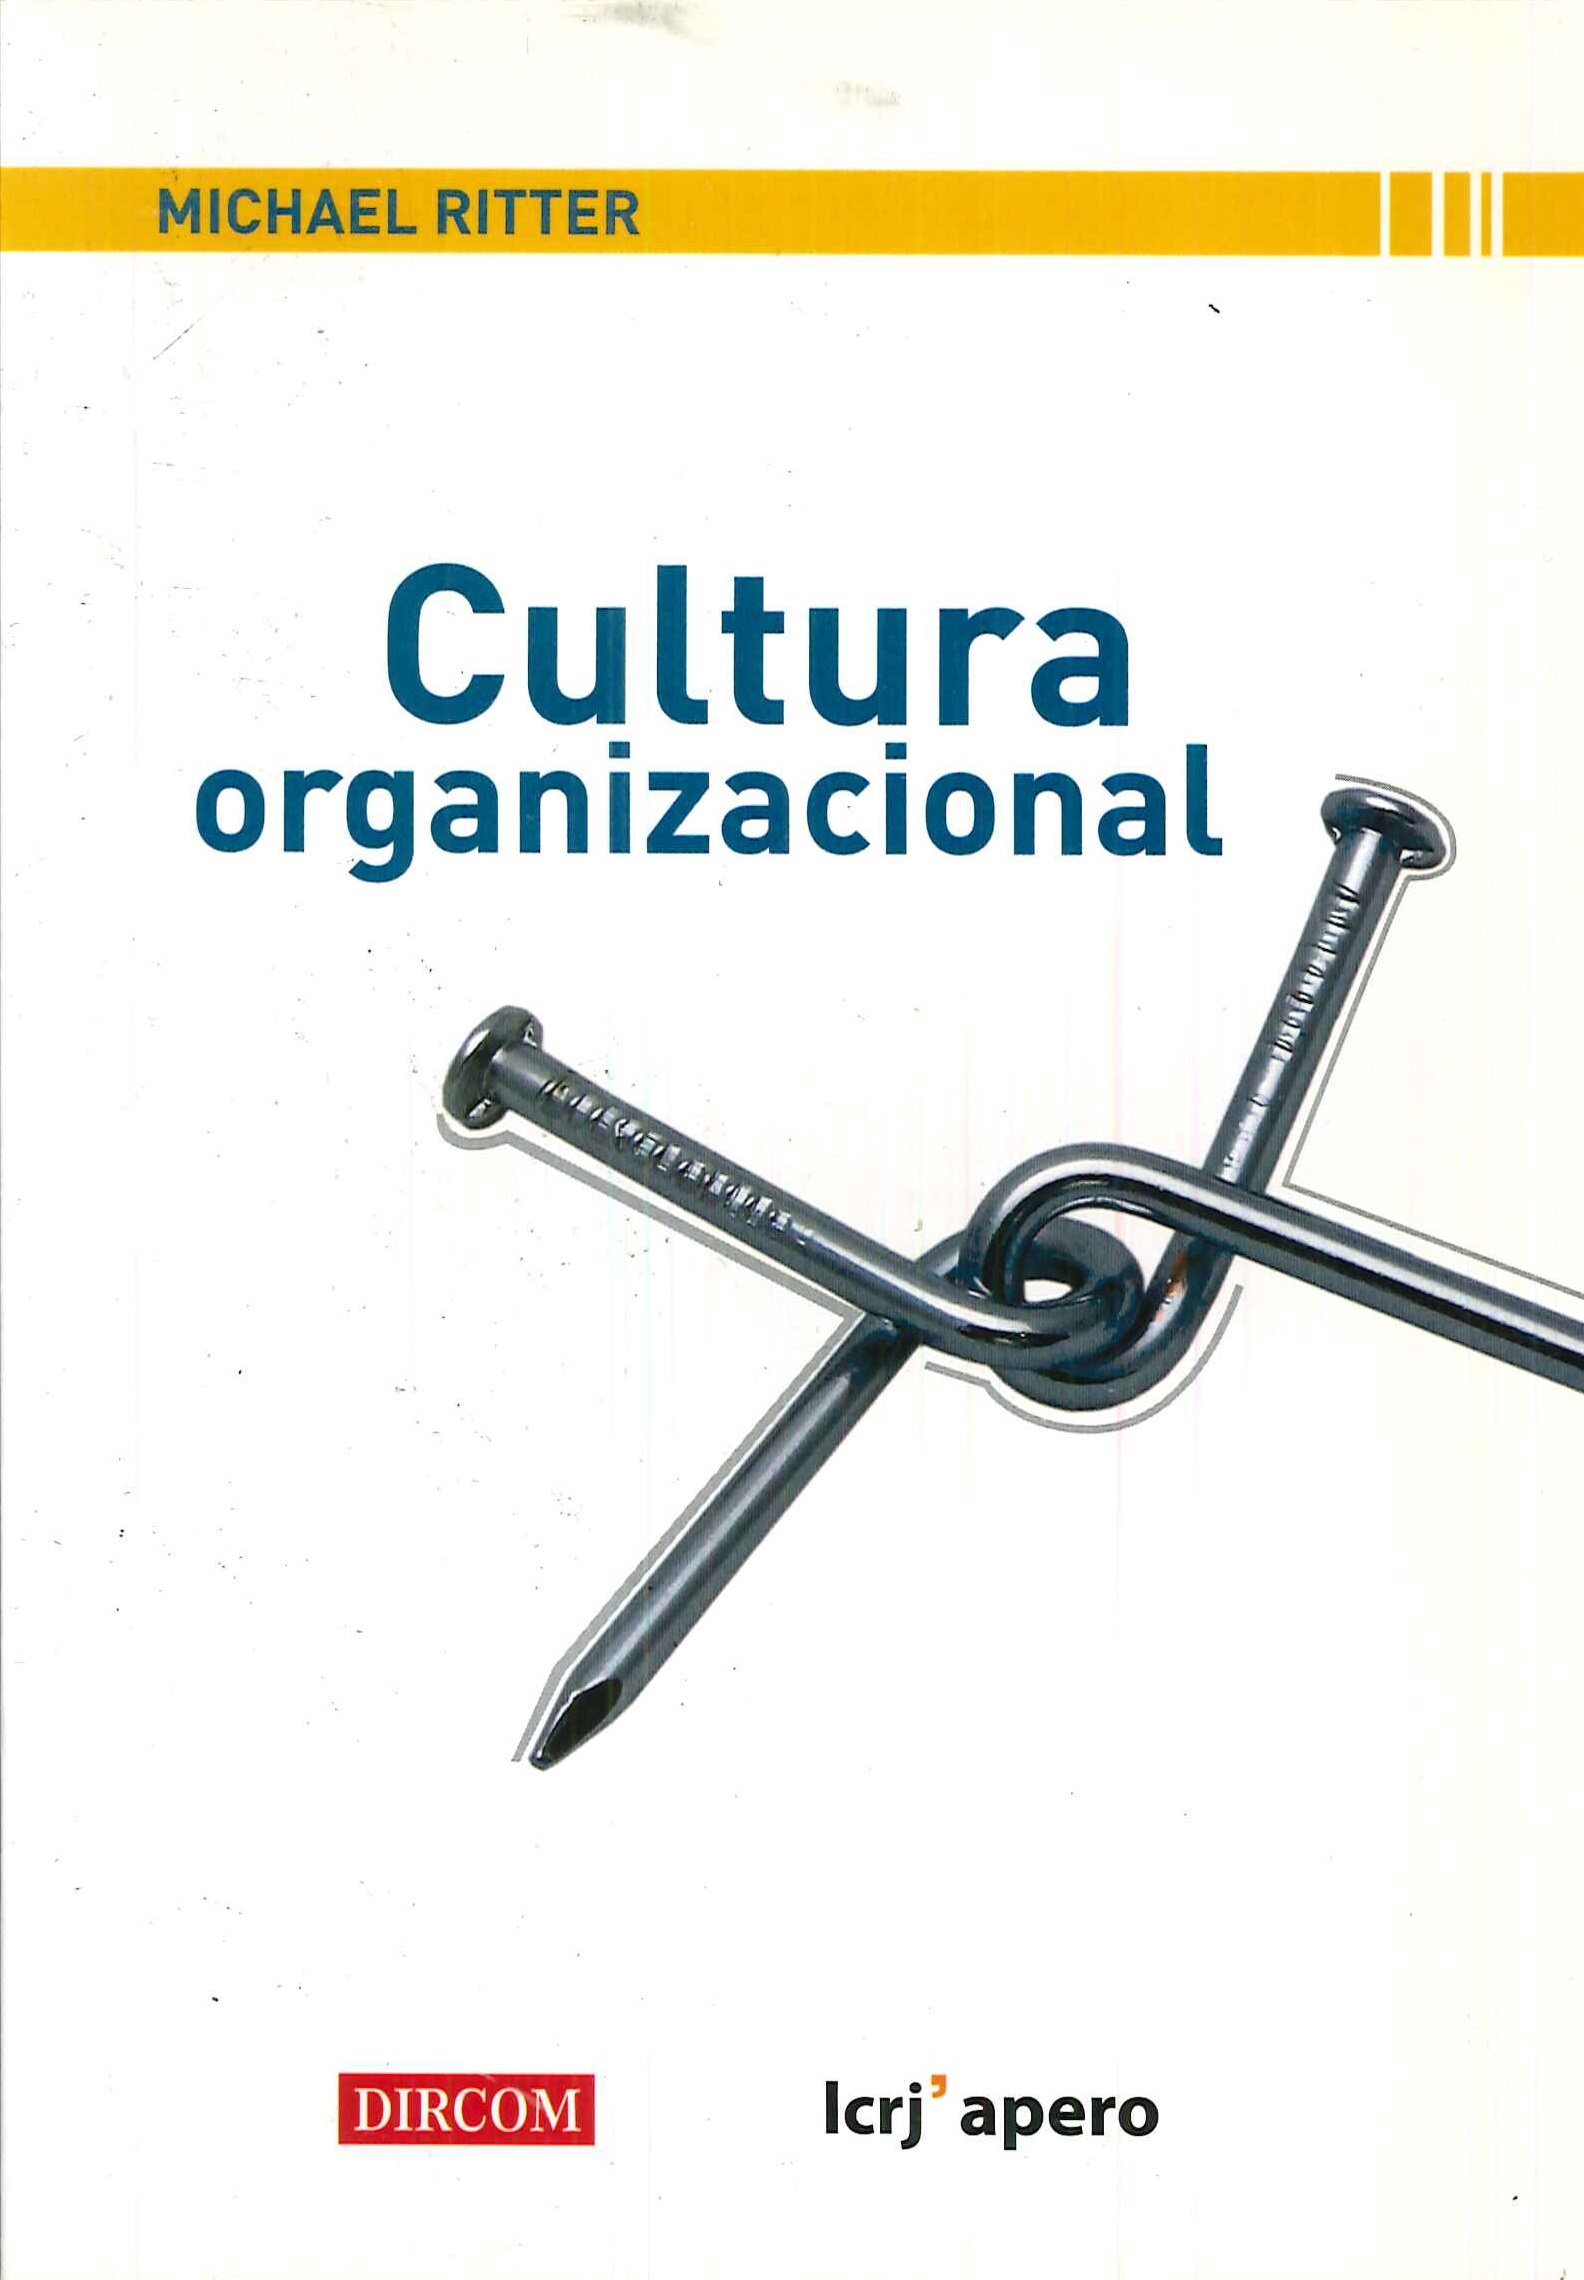 Cultura organizacional